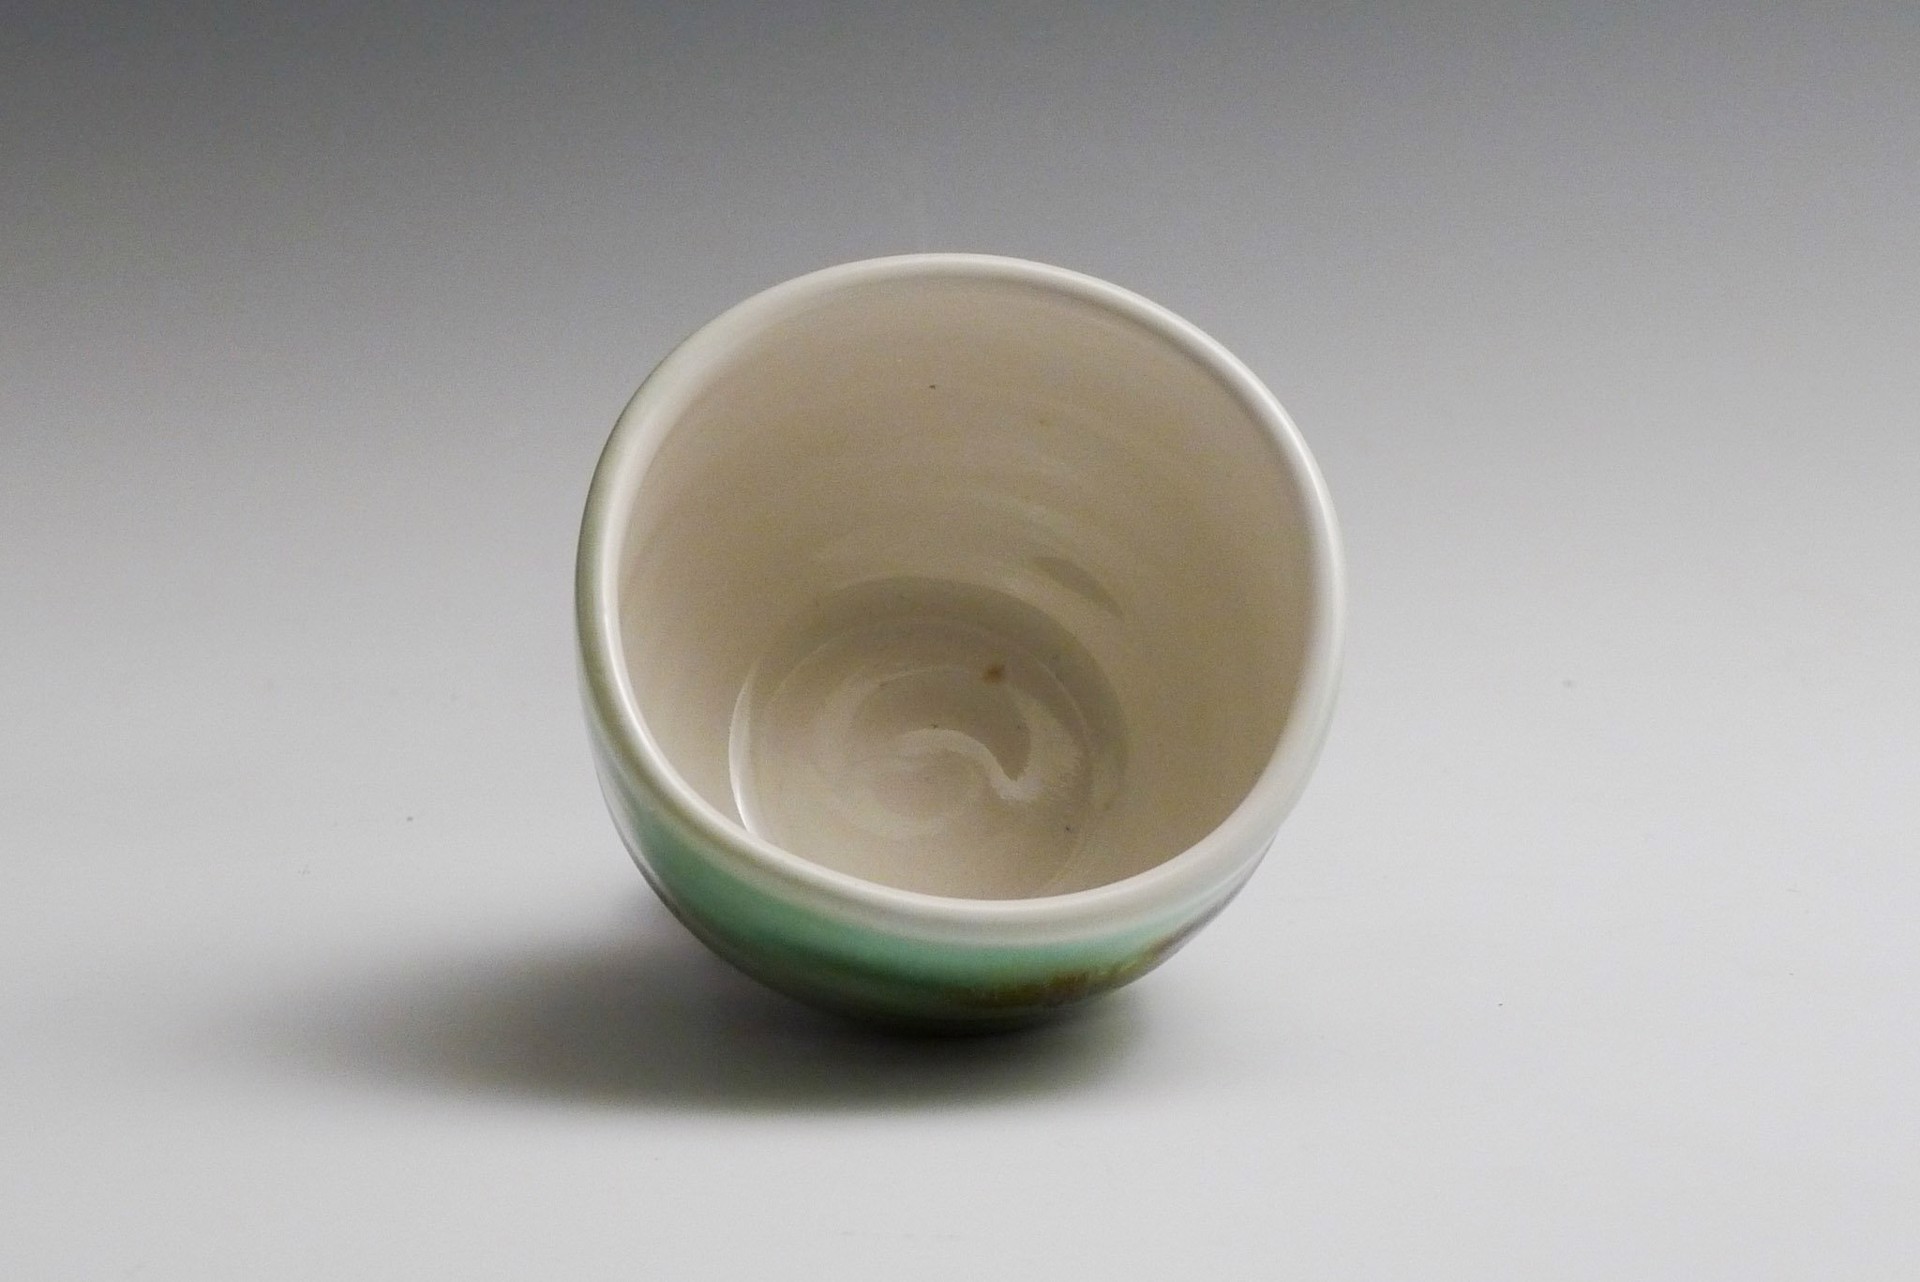 Cup by Debbie Kupinsky